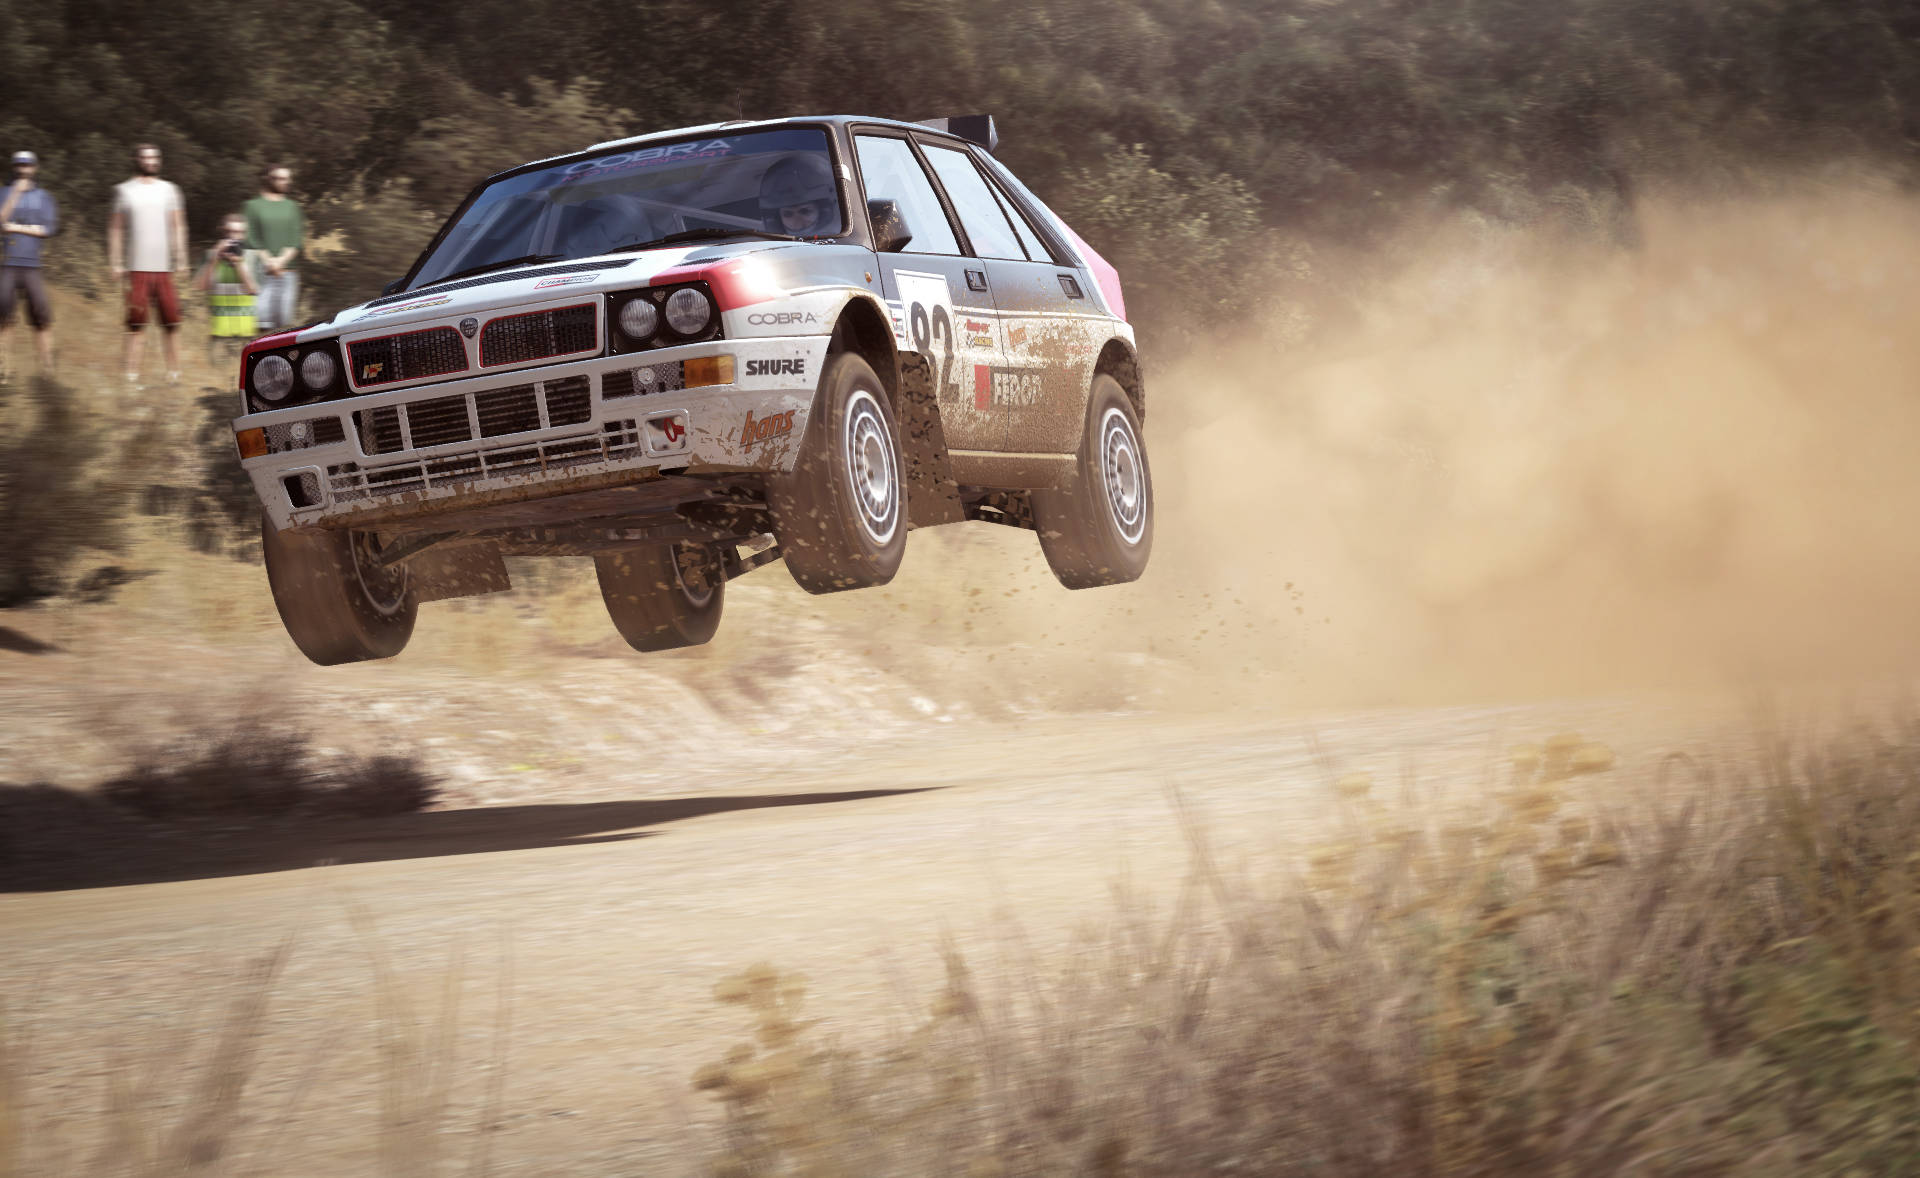 Dynamic Car Drifting On Muddy Track In Dirt Rally Race Wallpaper